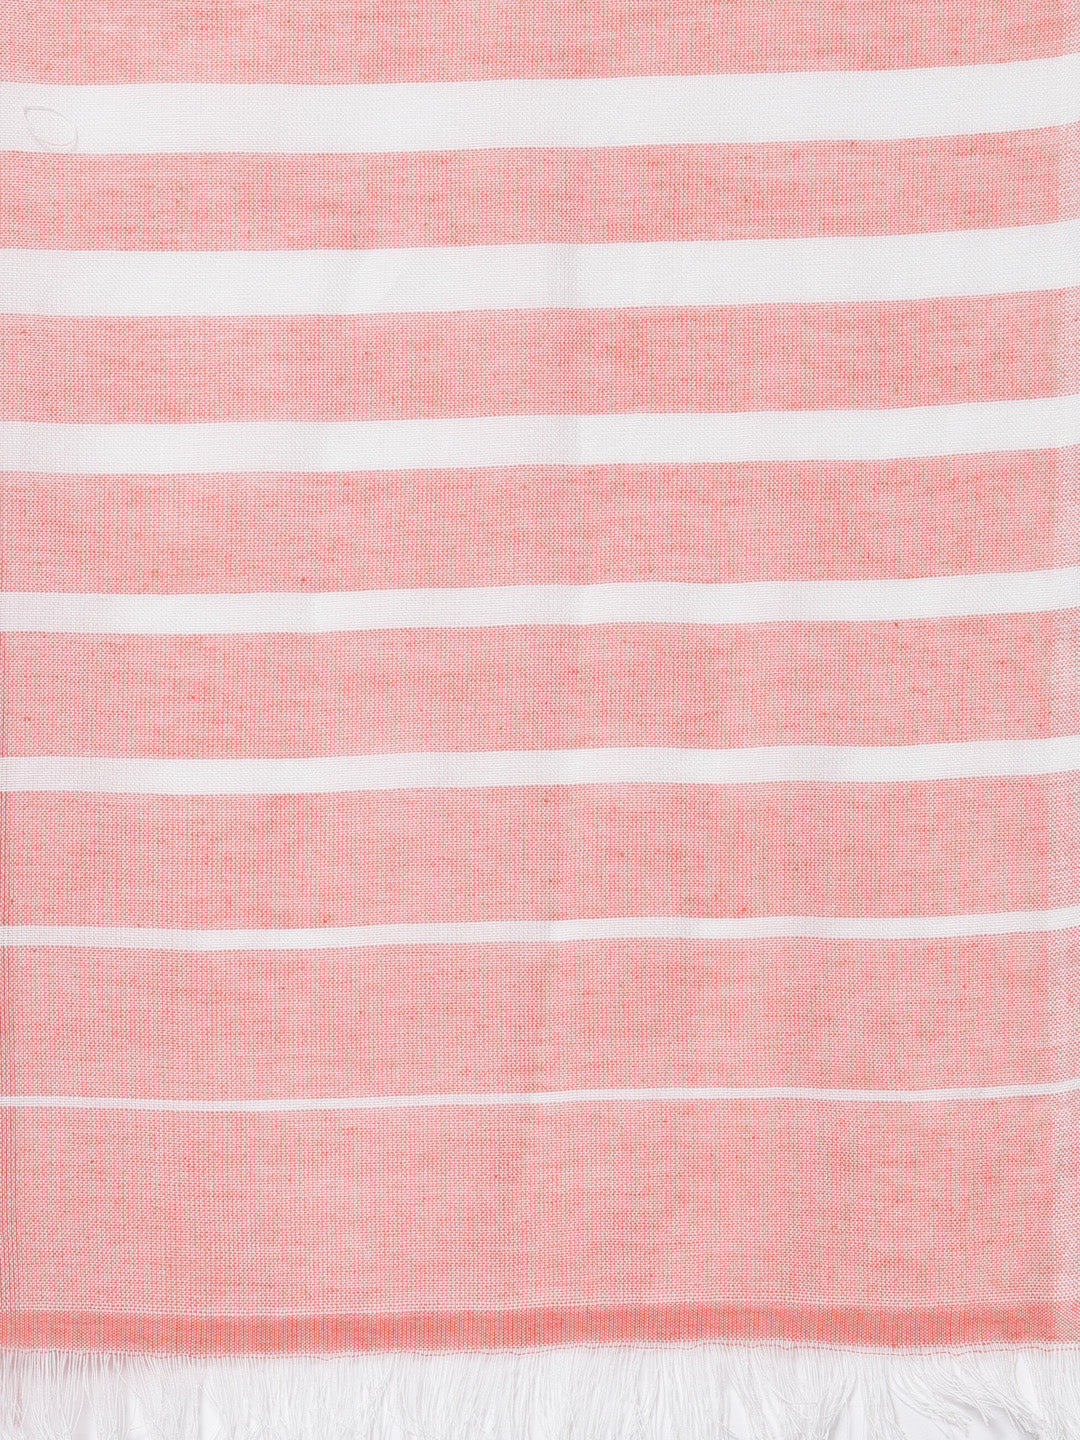 Arrabi Red Stripes Handwoven Cotton Full Size Stole (185 x 85 cm)